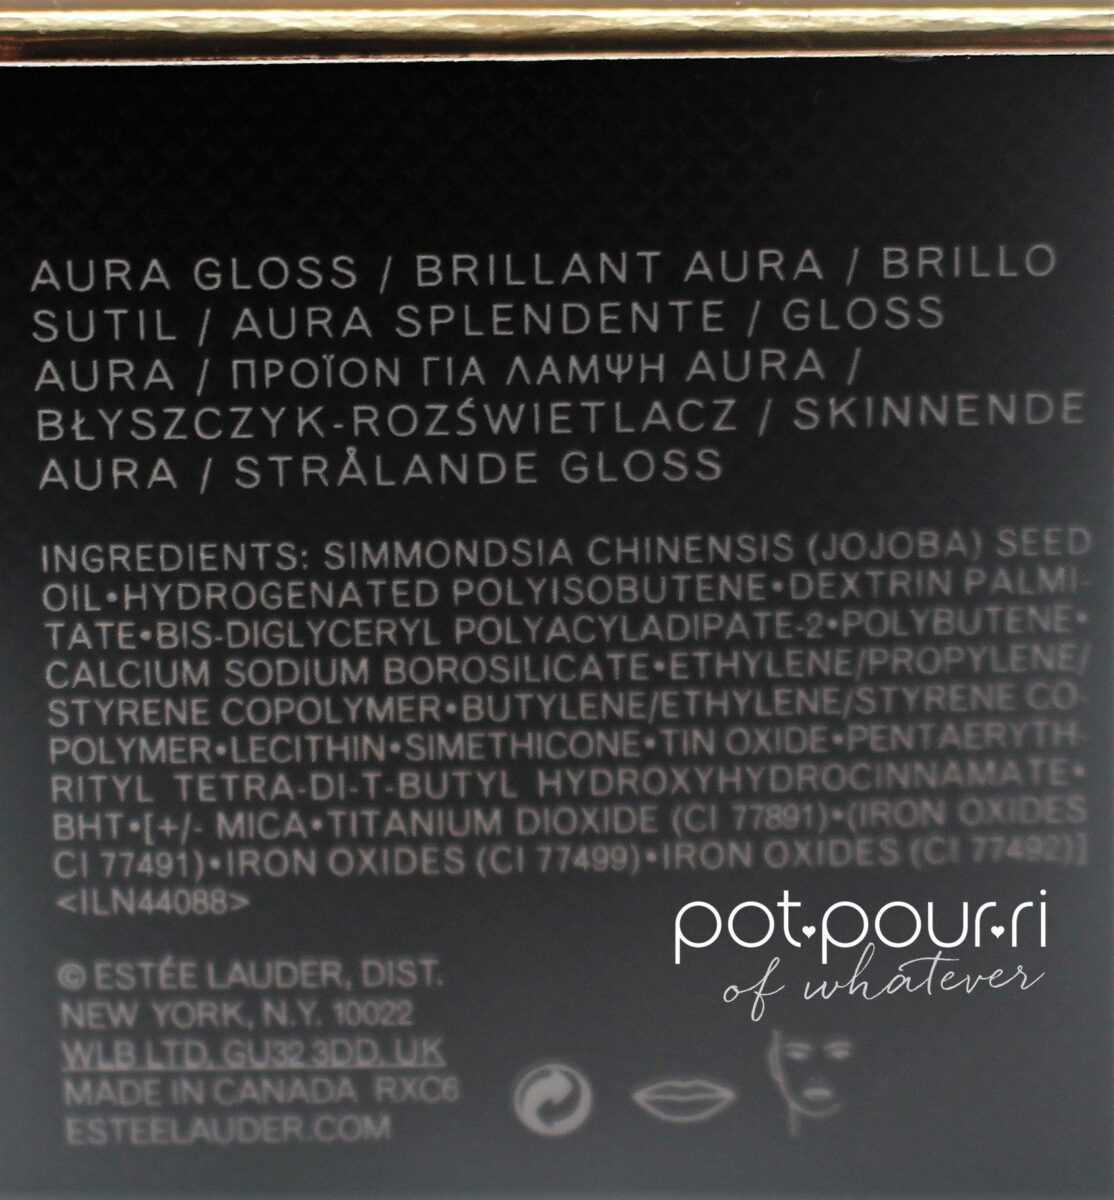 Aura Gloss ingredients